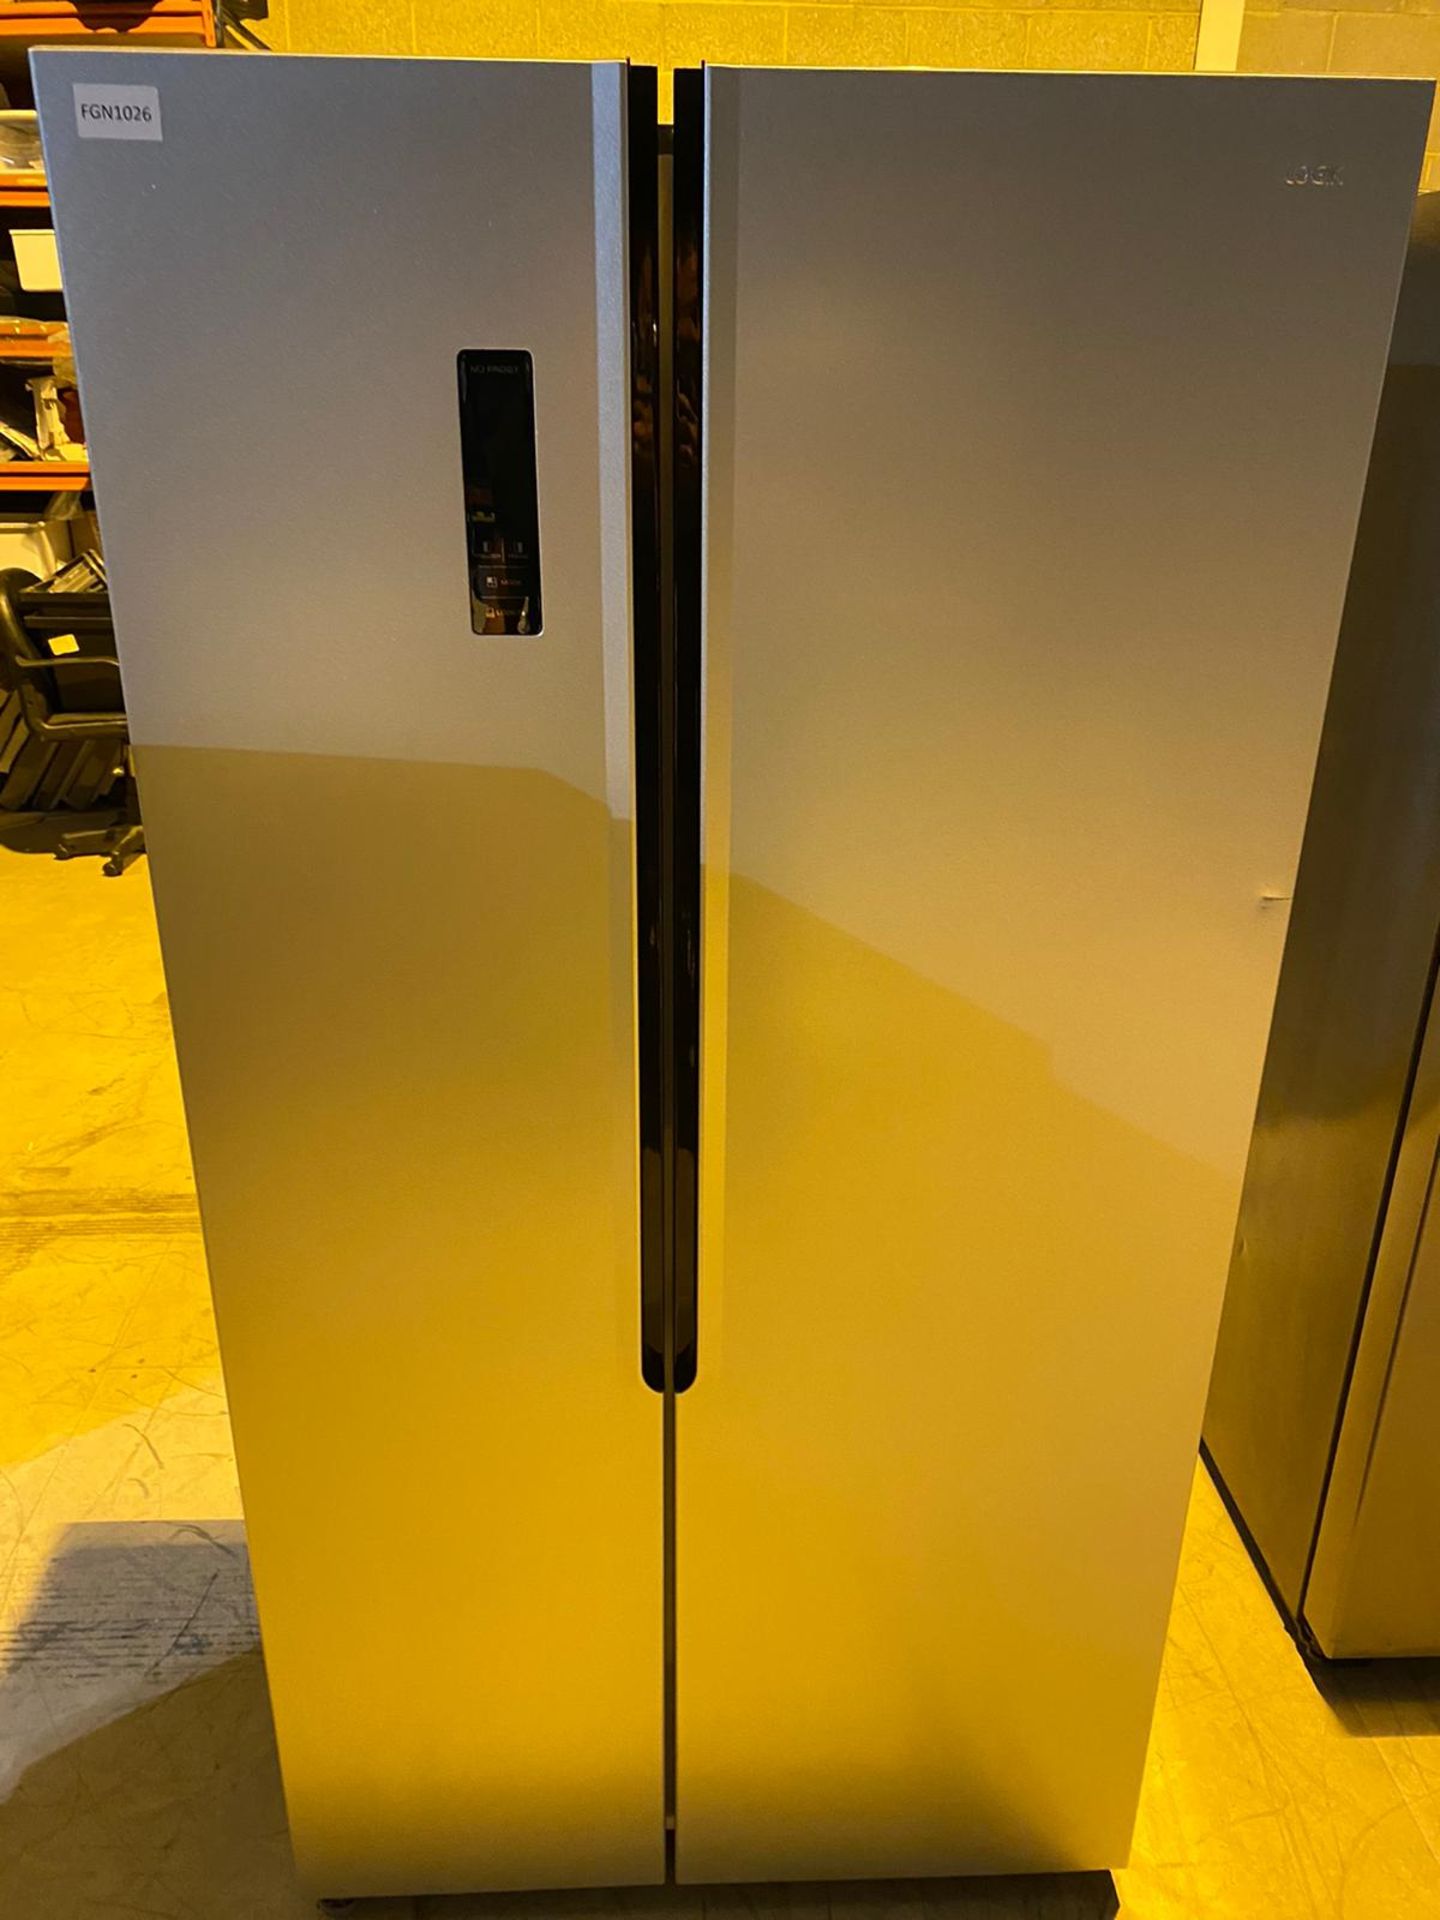 1 x Logik LSBSDX20 Stainless Steel American Fridge Freezer With Water Dispenser - Image 3 of 7